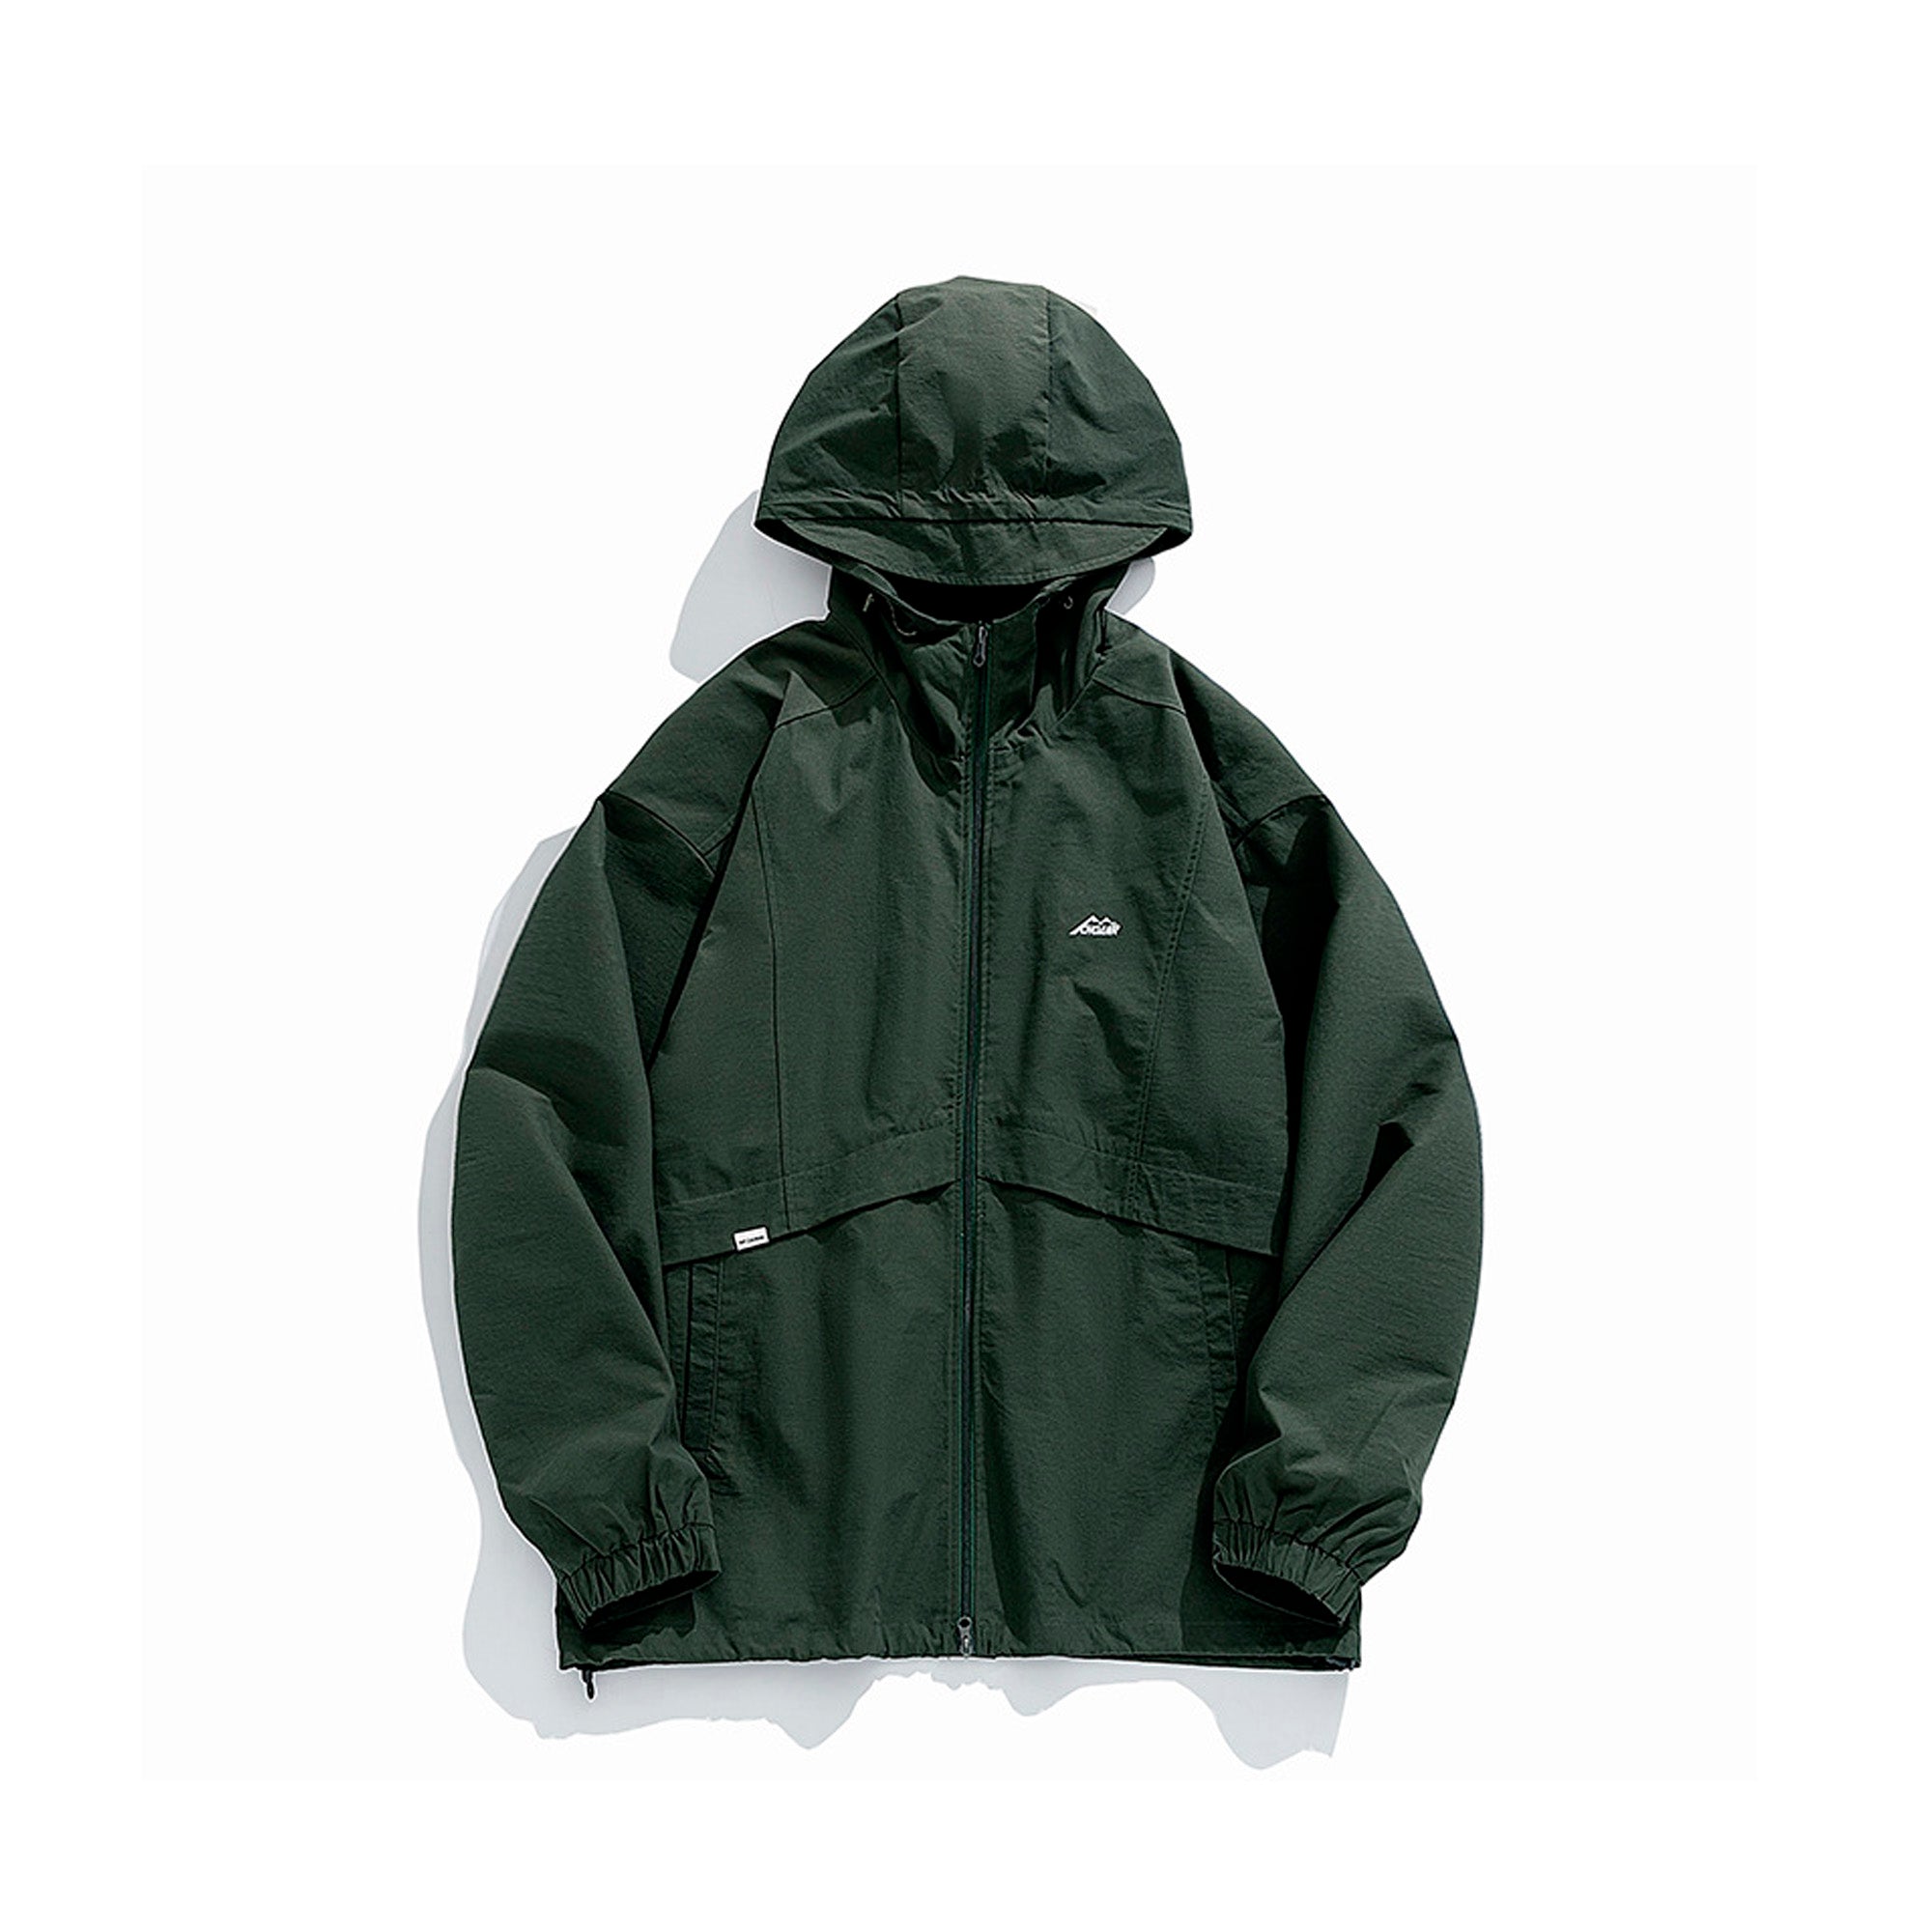 Wide-shaped work hooded jacket